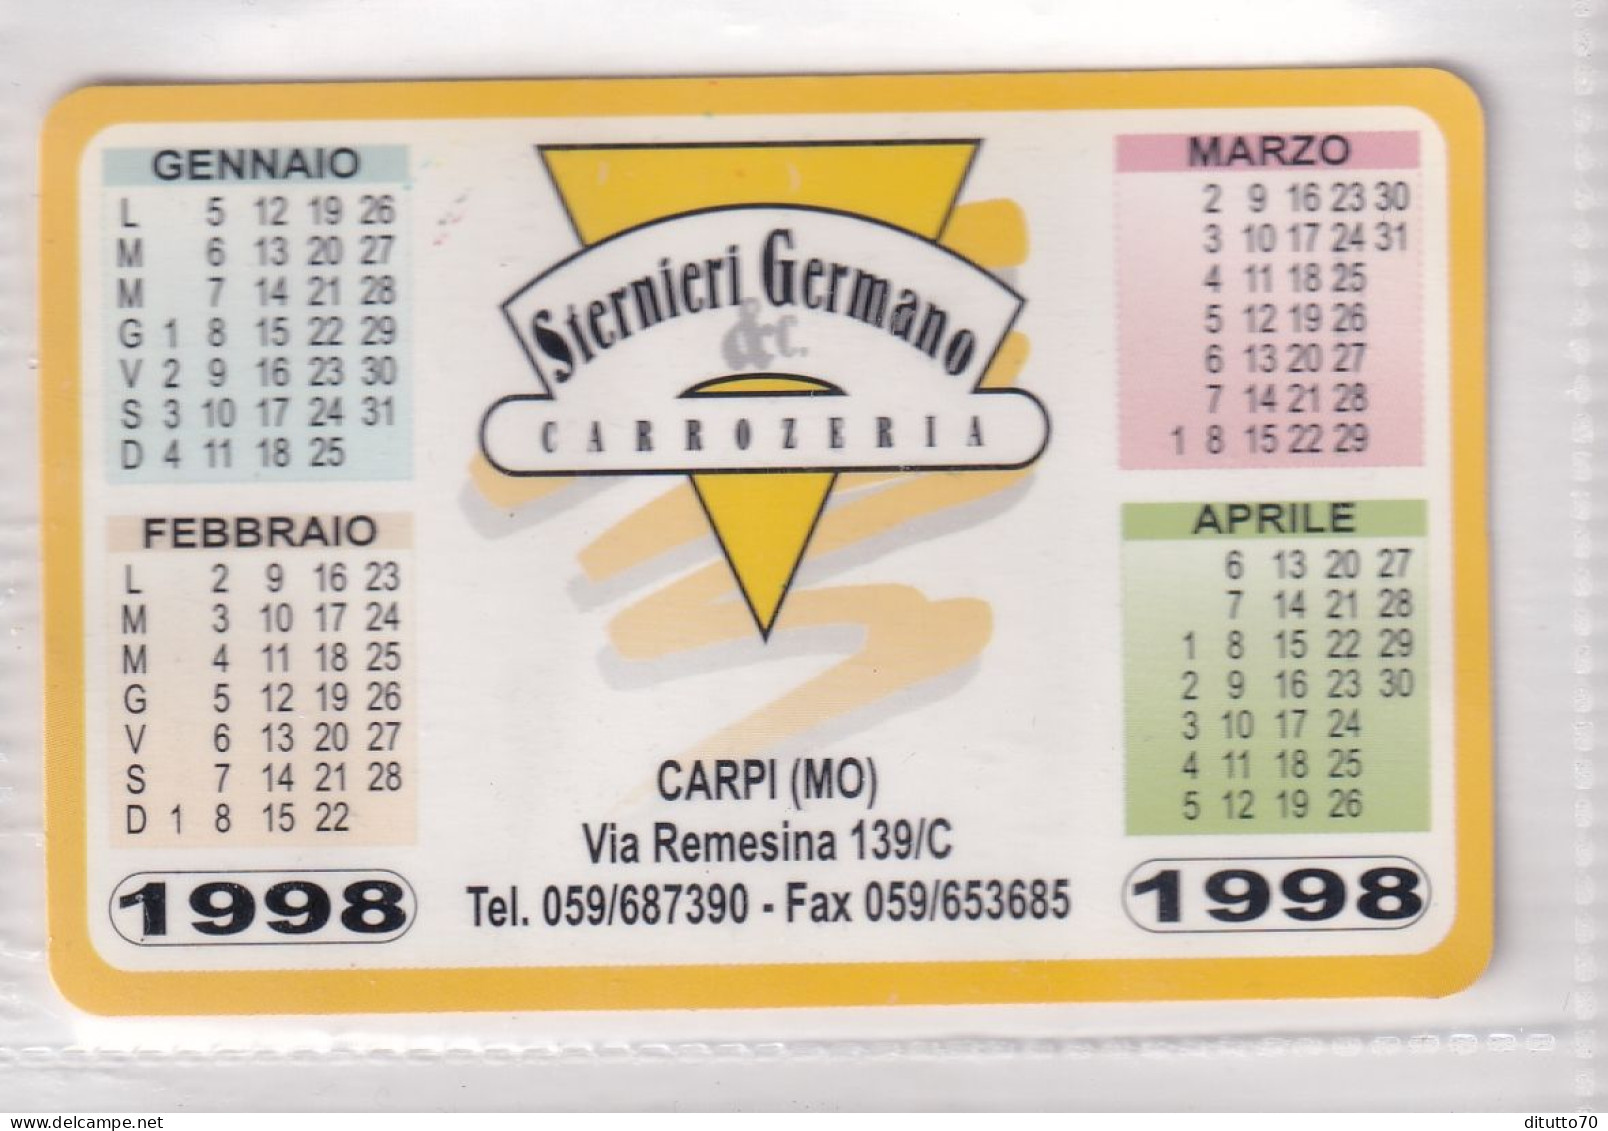 Calendarietto - Carrozzeria - Siernieri Ermano - Carpi - Modena - Anno 1998 - Klein Formaat: 1991-00